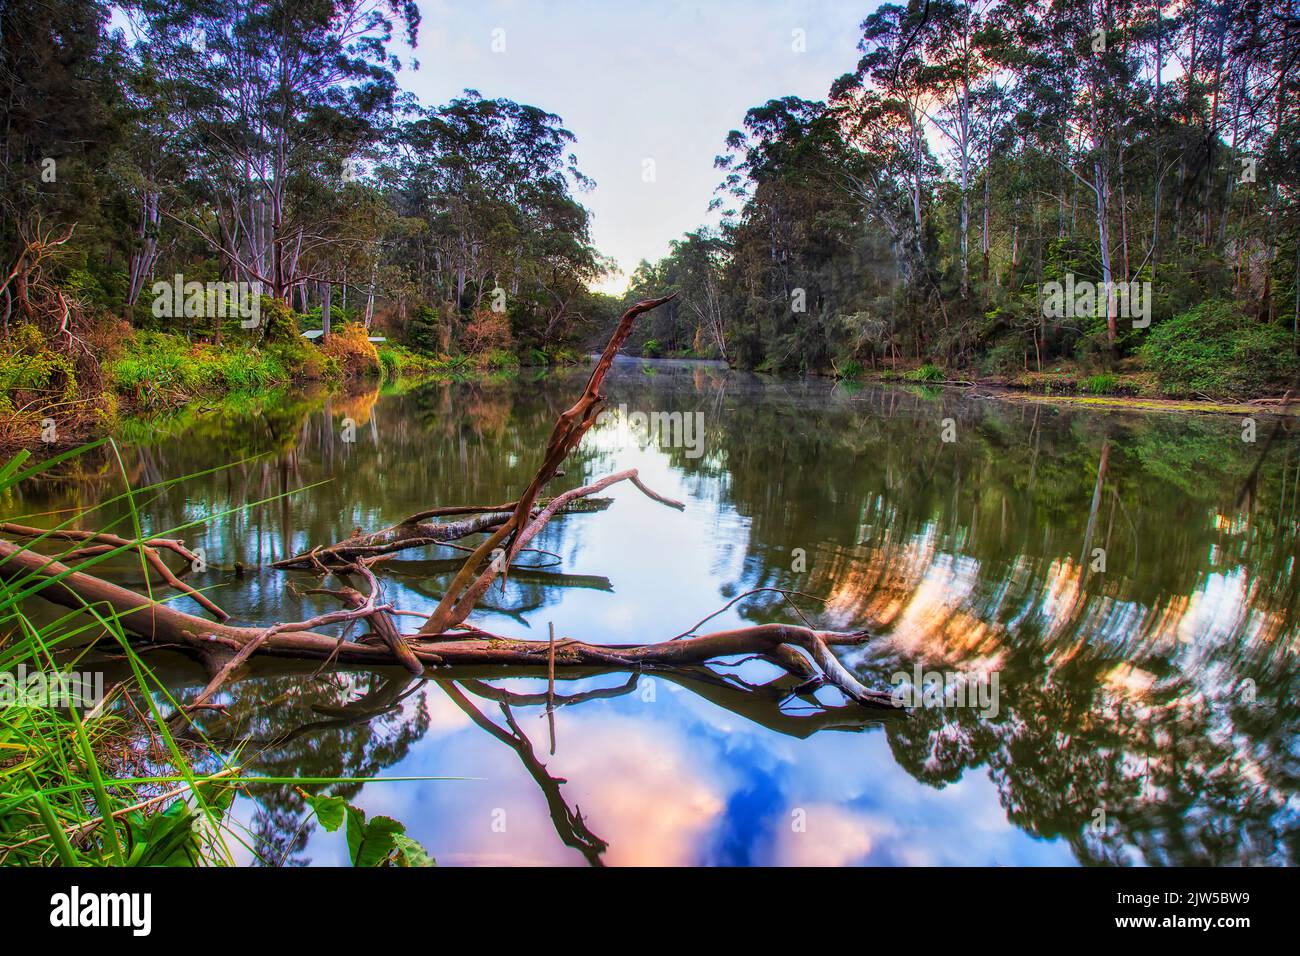 Lane Cove river in Sydney national park - green nature reserve landscape at sunrise. Stock Photo